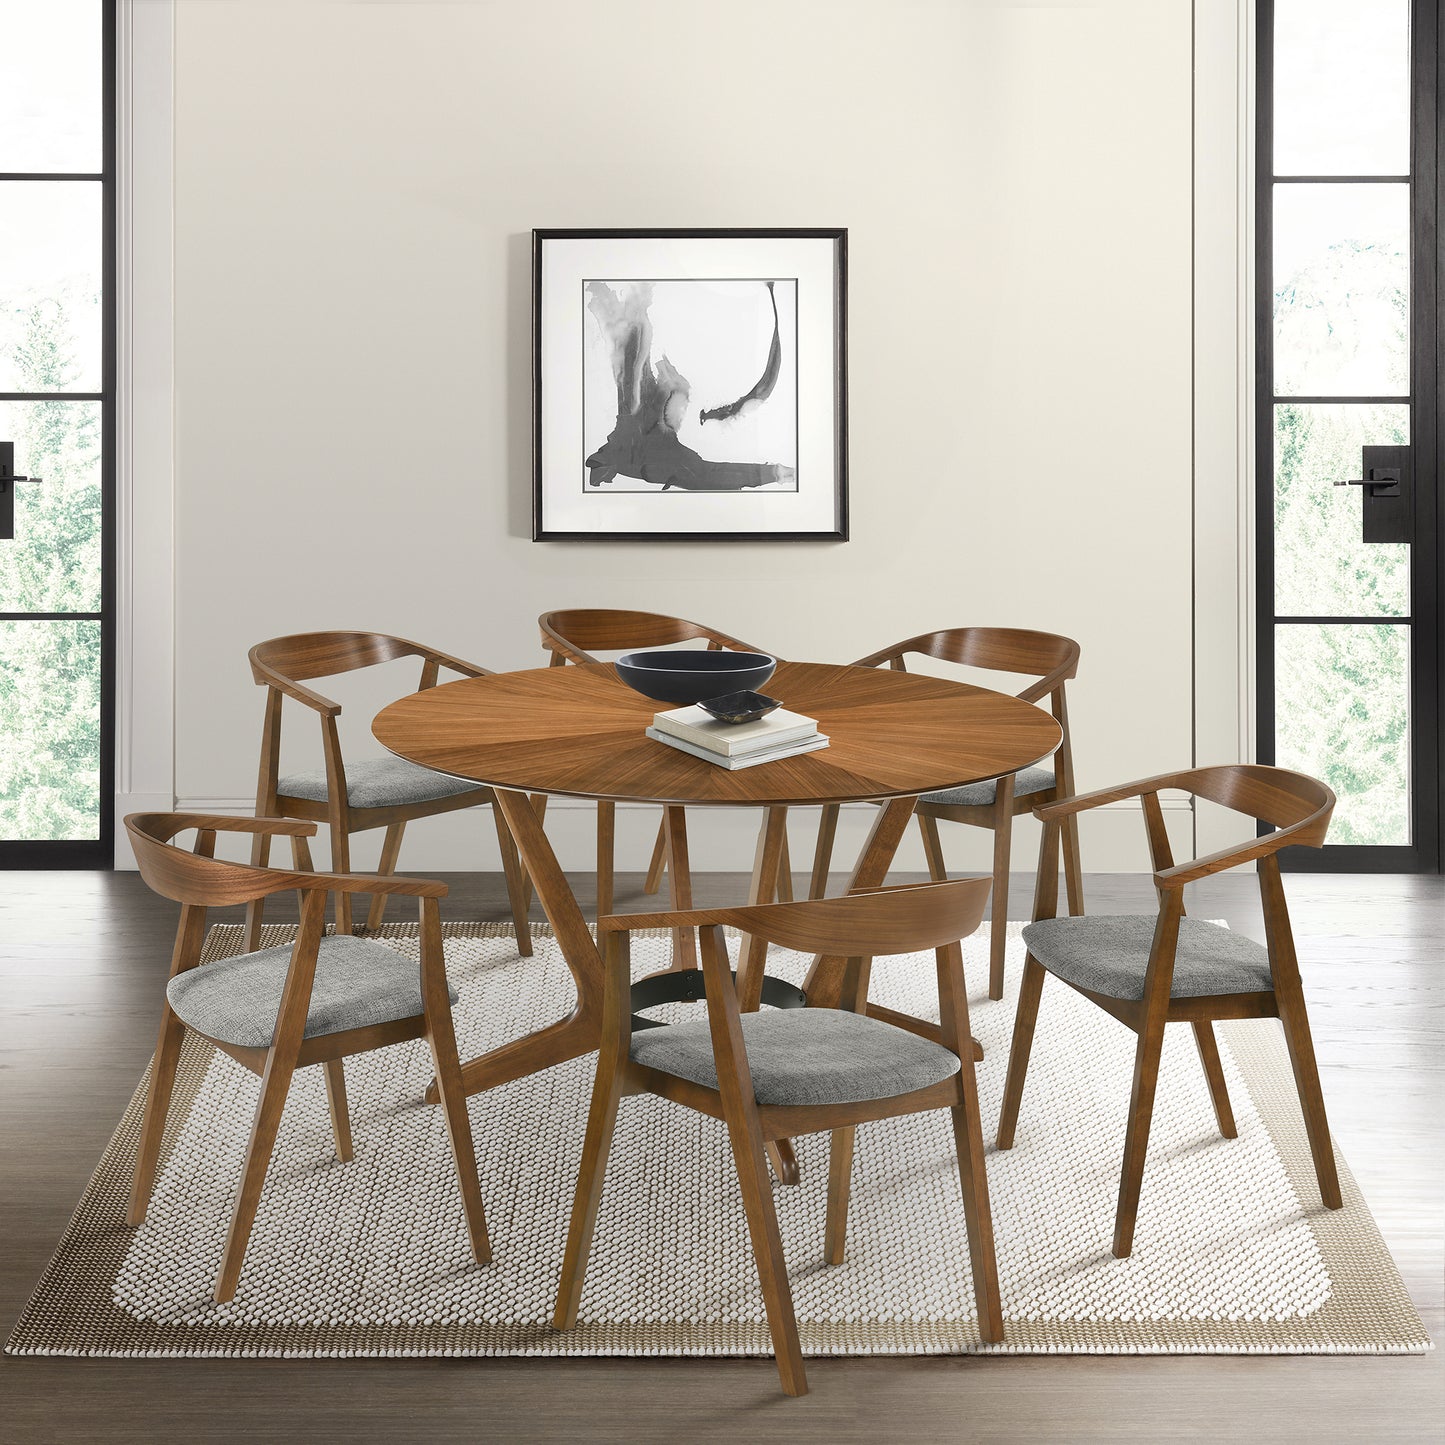 Santana 7 Piece Round Walnut Wood Dining Table Set with Charcoal Fabric